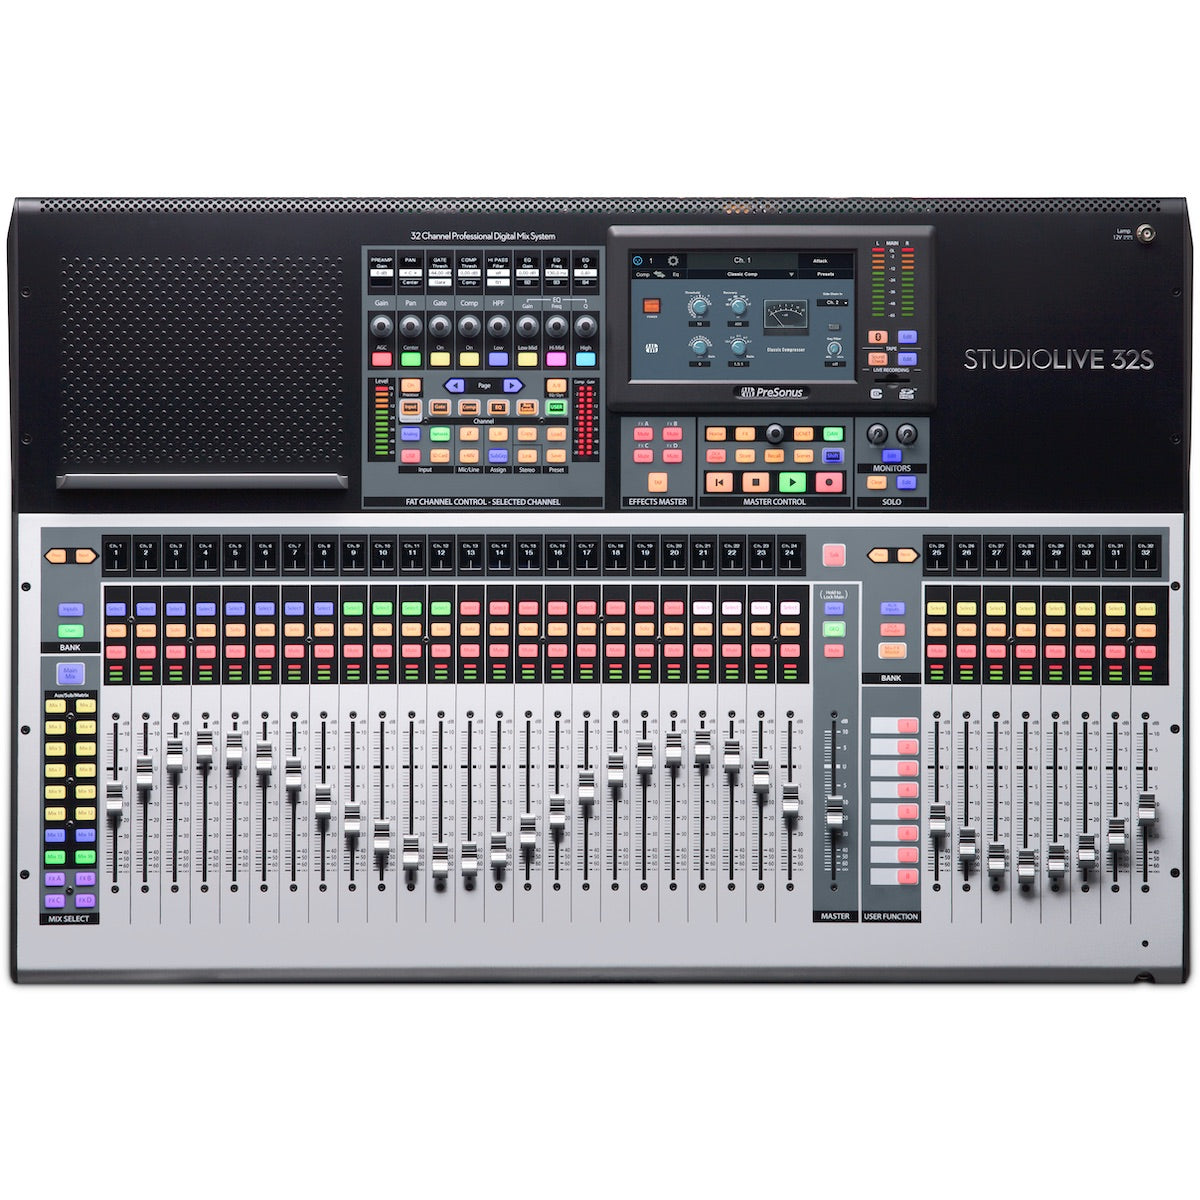 PreSonus StudioLive 32S - 32-channel Digital Mixer with Effects, top